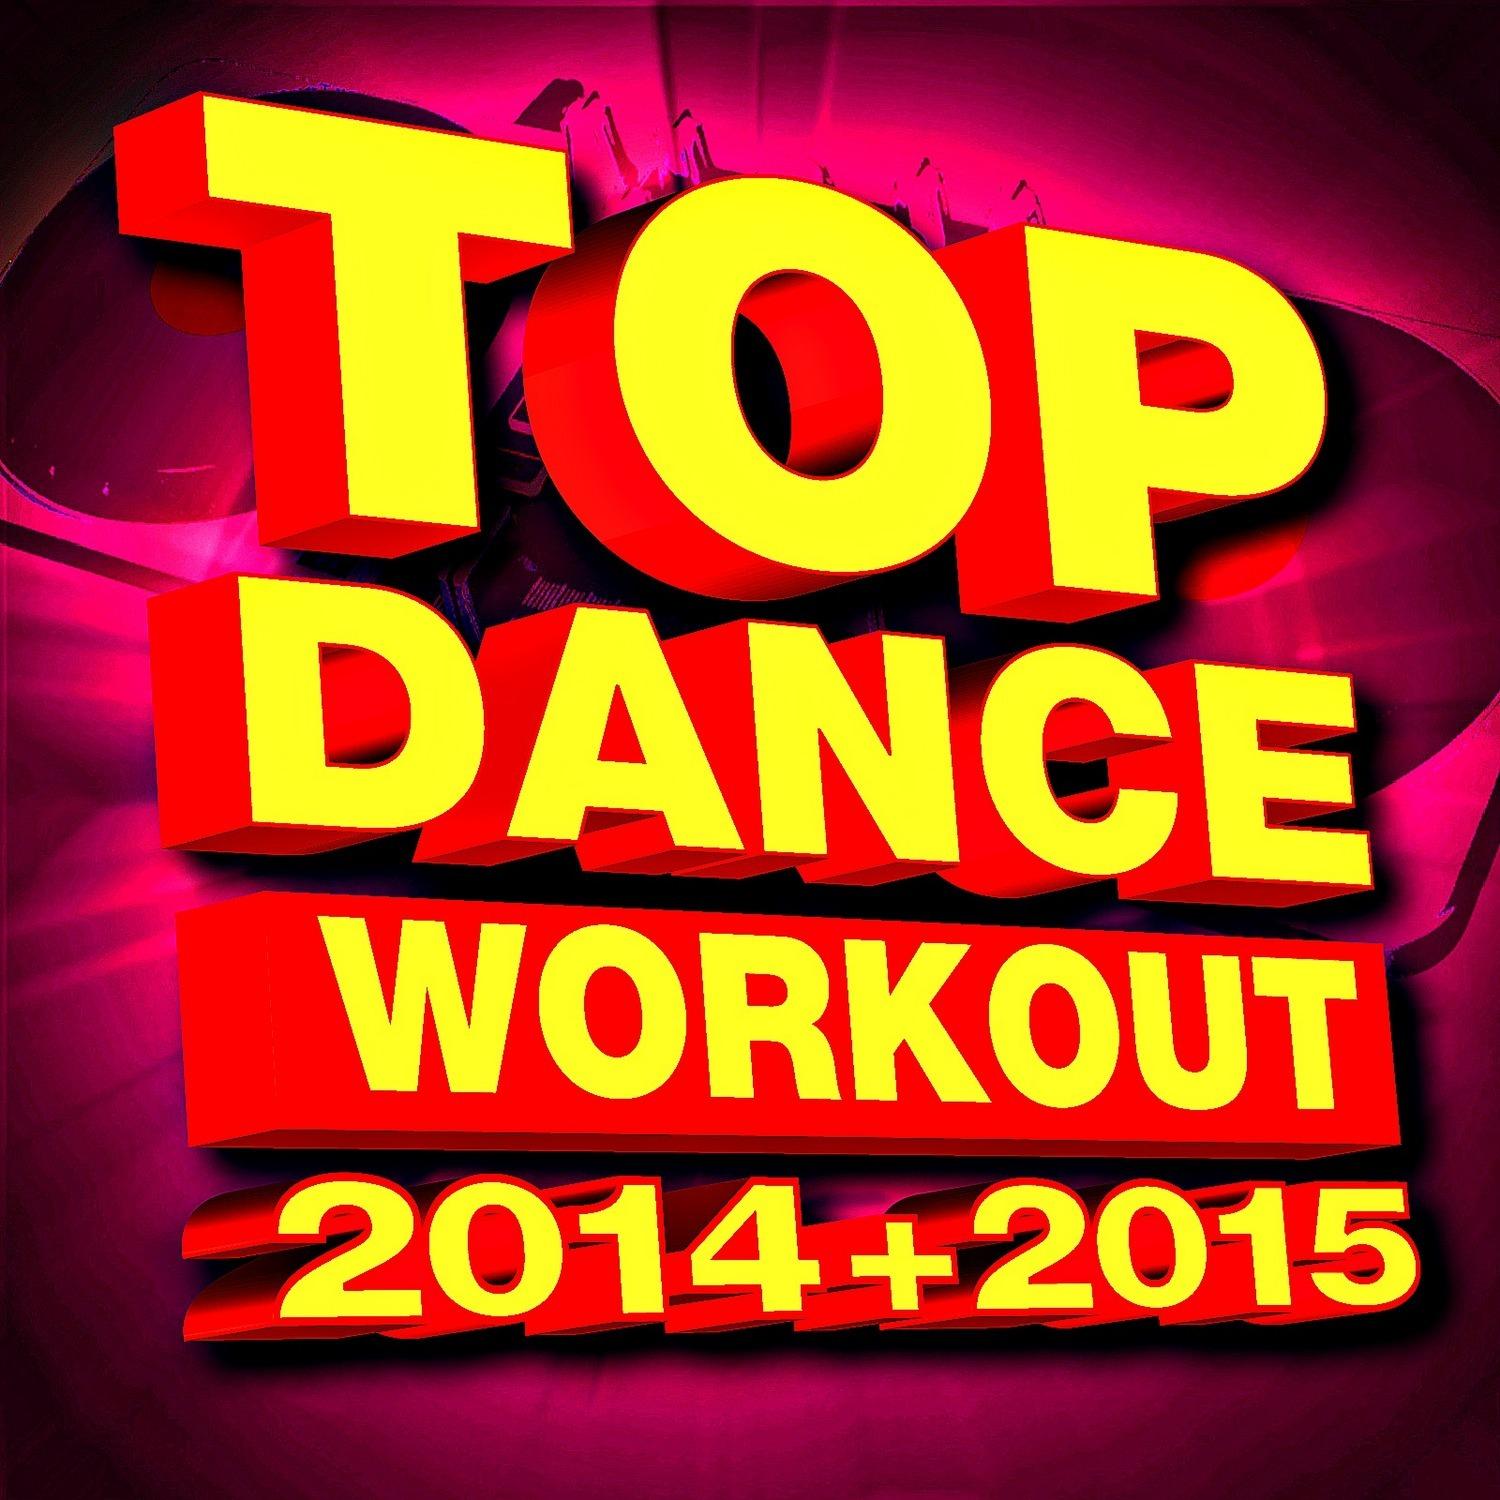 Top Dance Workout 2014 + 2015